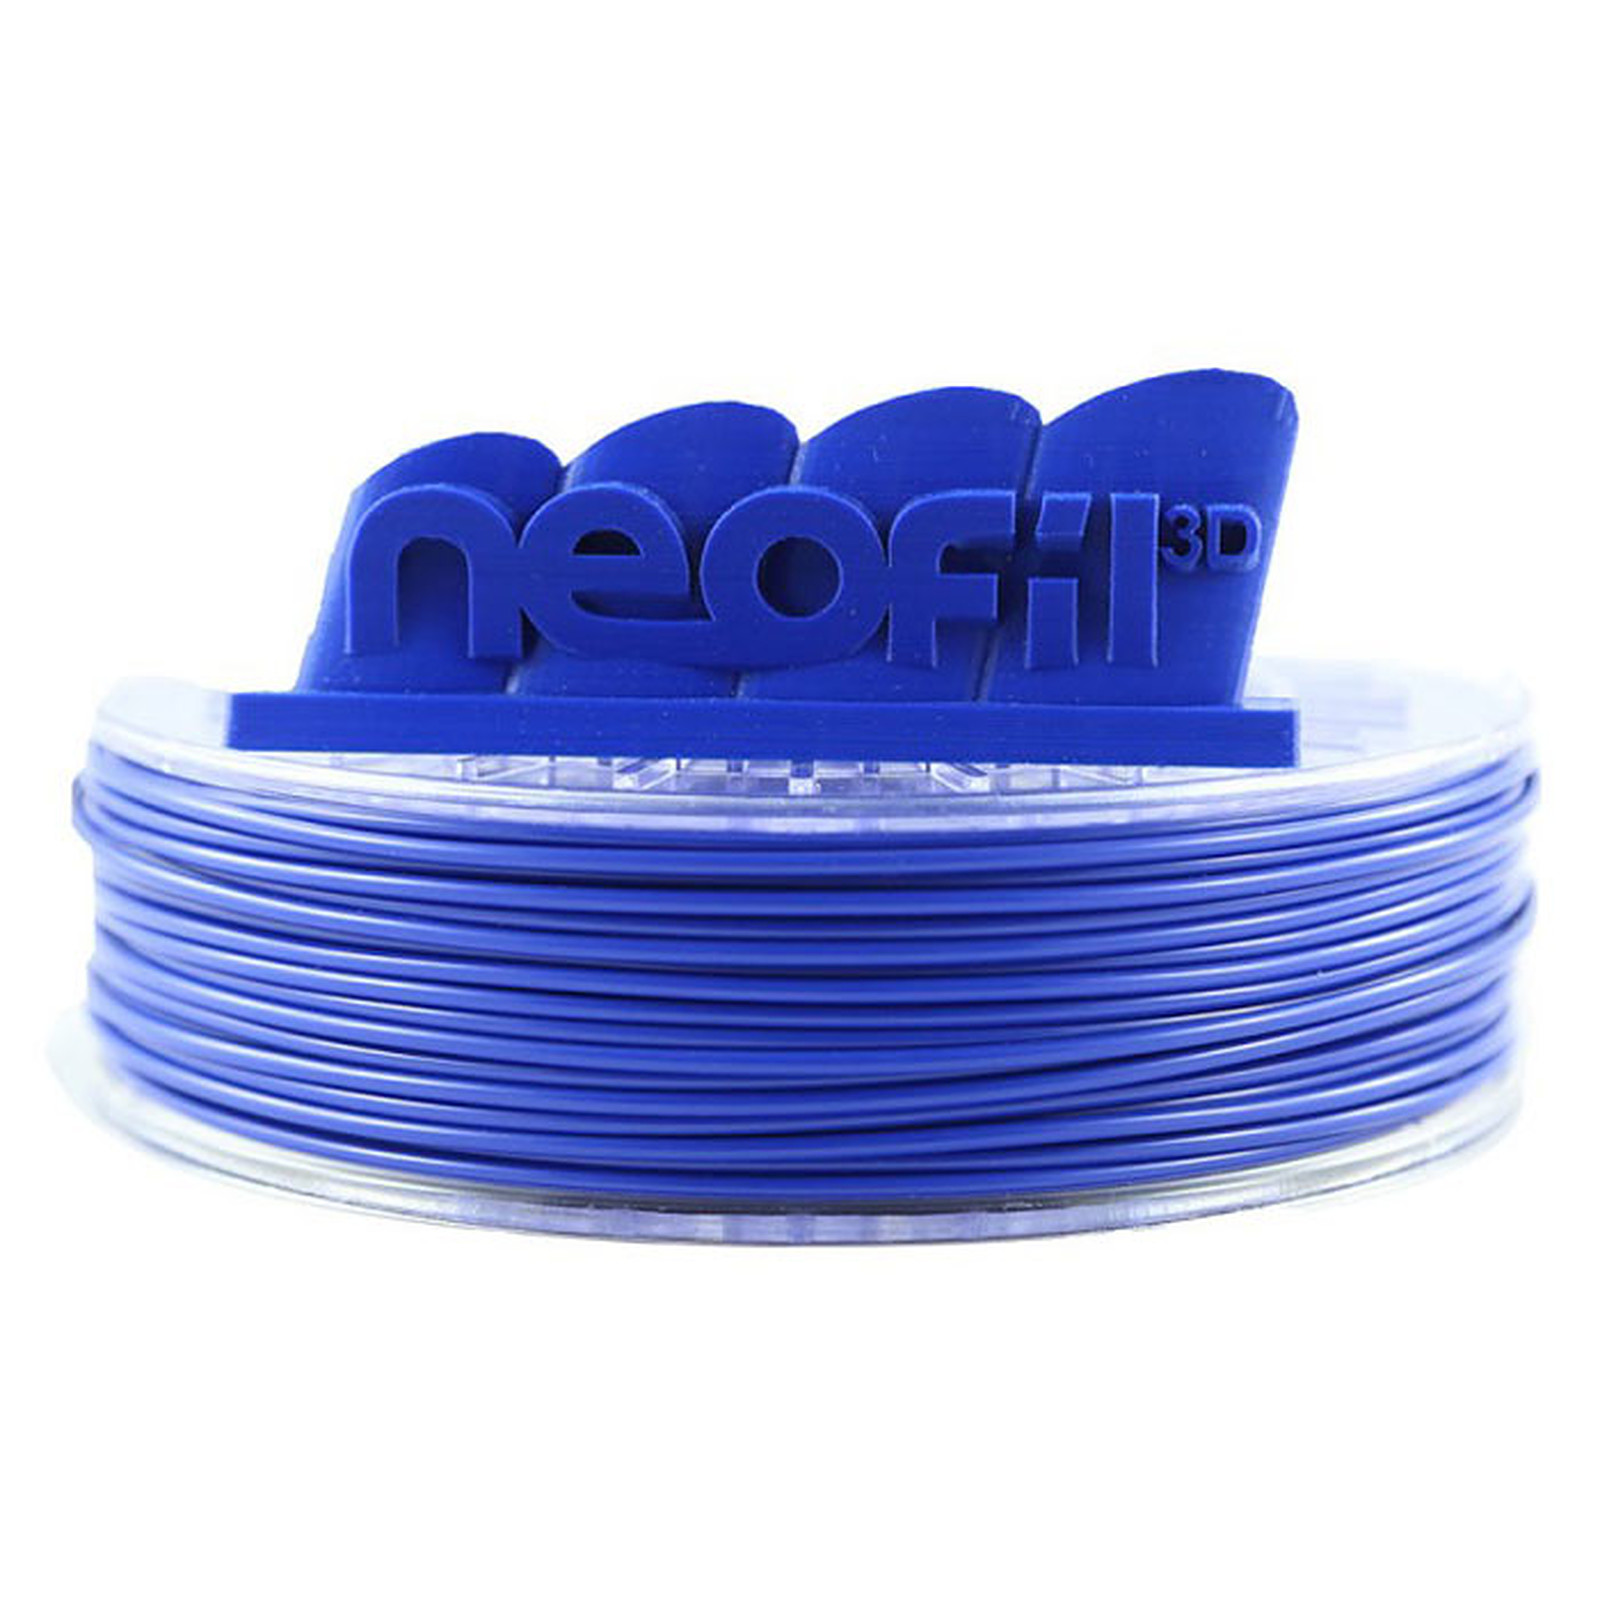 Neofil3D Bobine ABS 1.75mm 750g - Bleu fonce - Filament 3D Neofil3D